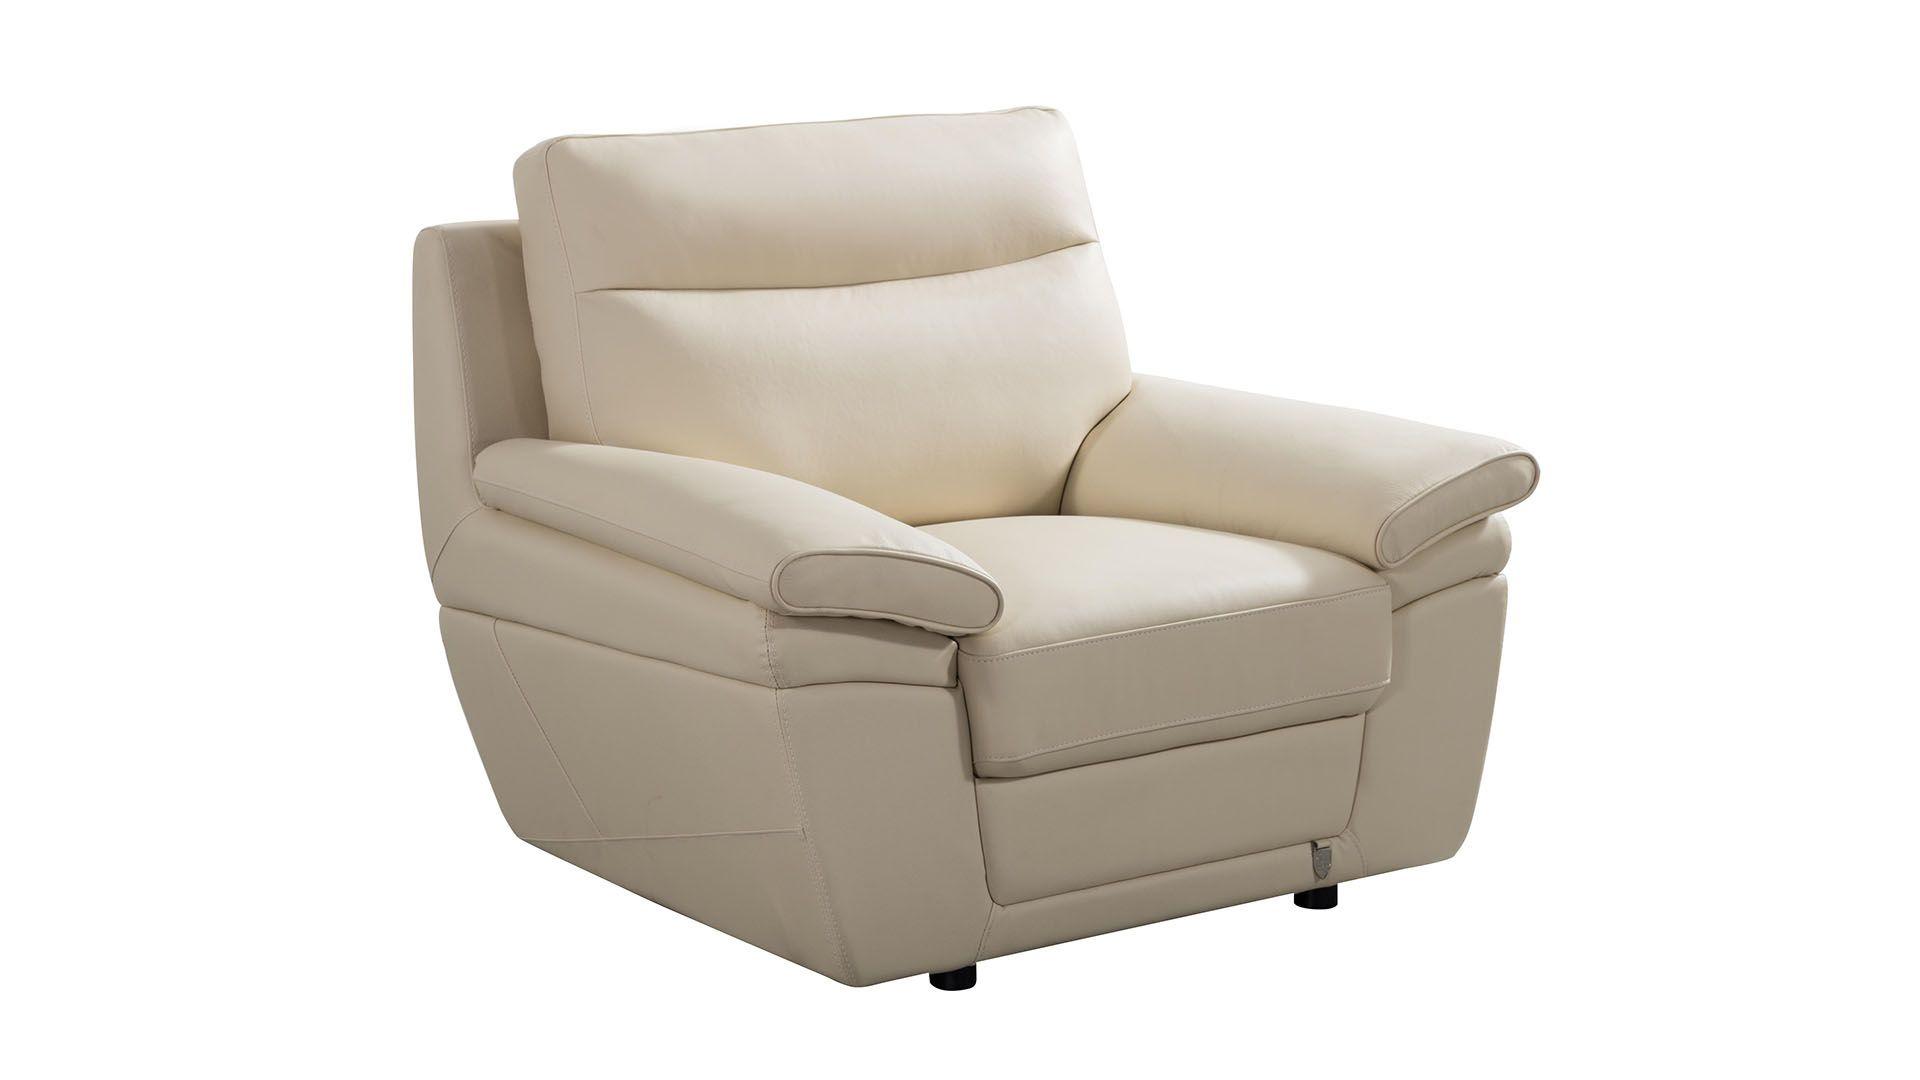 Contemporary, Modern Arm Chair EK092-GR-CHR EK092-GR-CHR in Cream Top grain leather